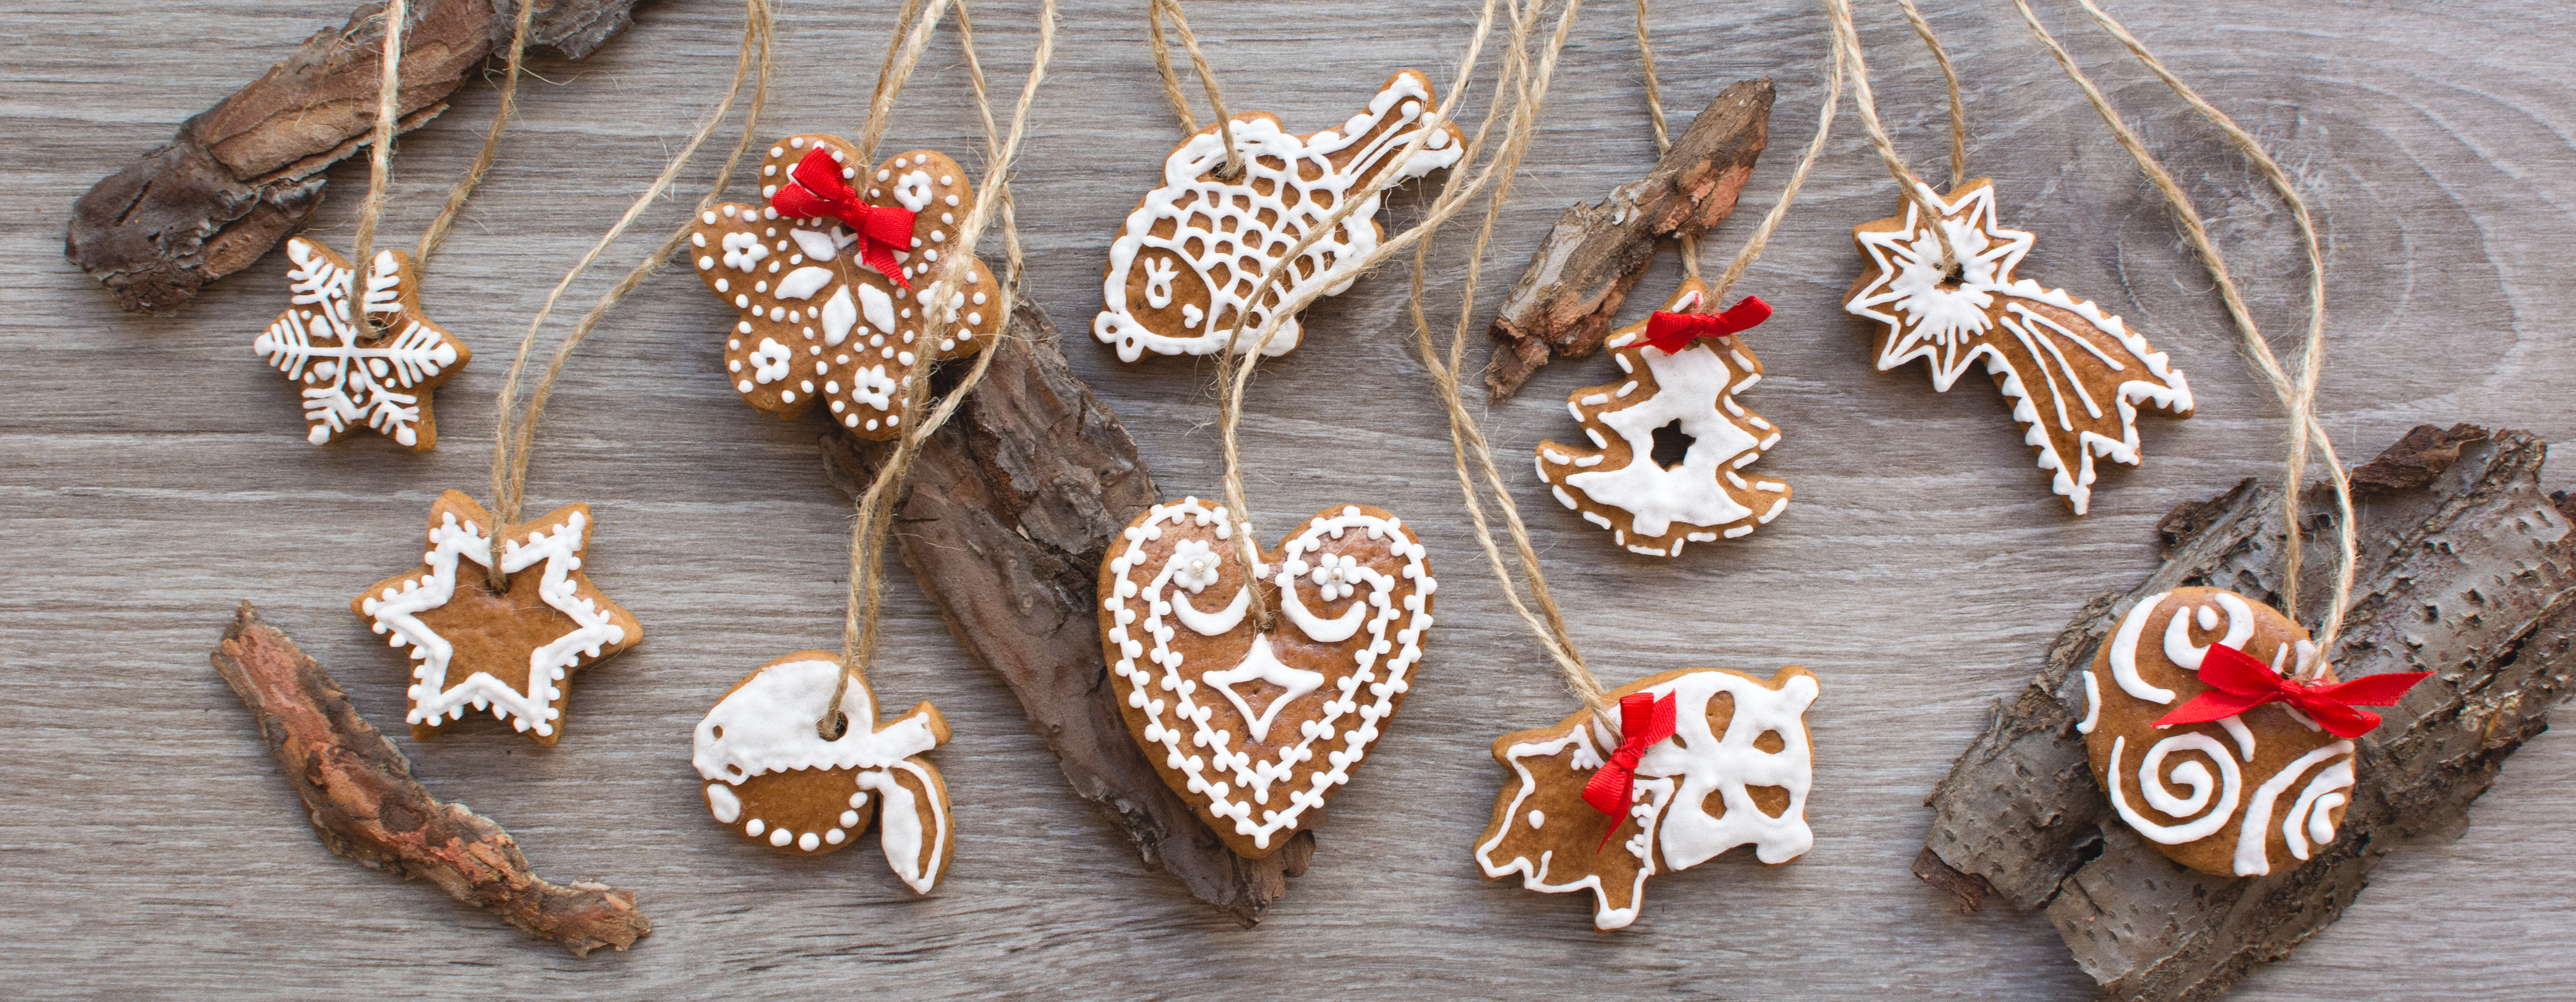 Bunch of homemade Christmas cinnamon gingerbreads by Jakub Kapusnak